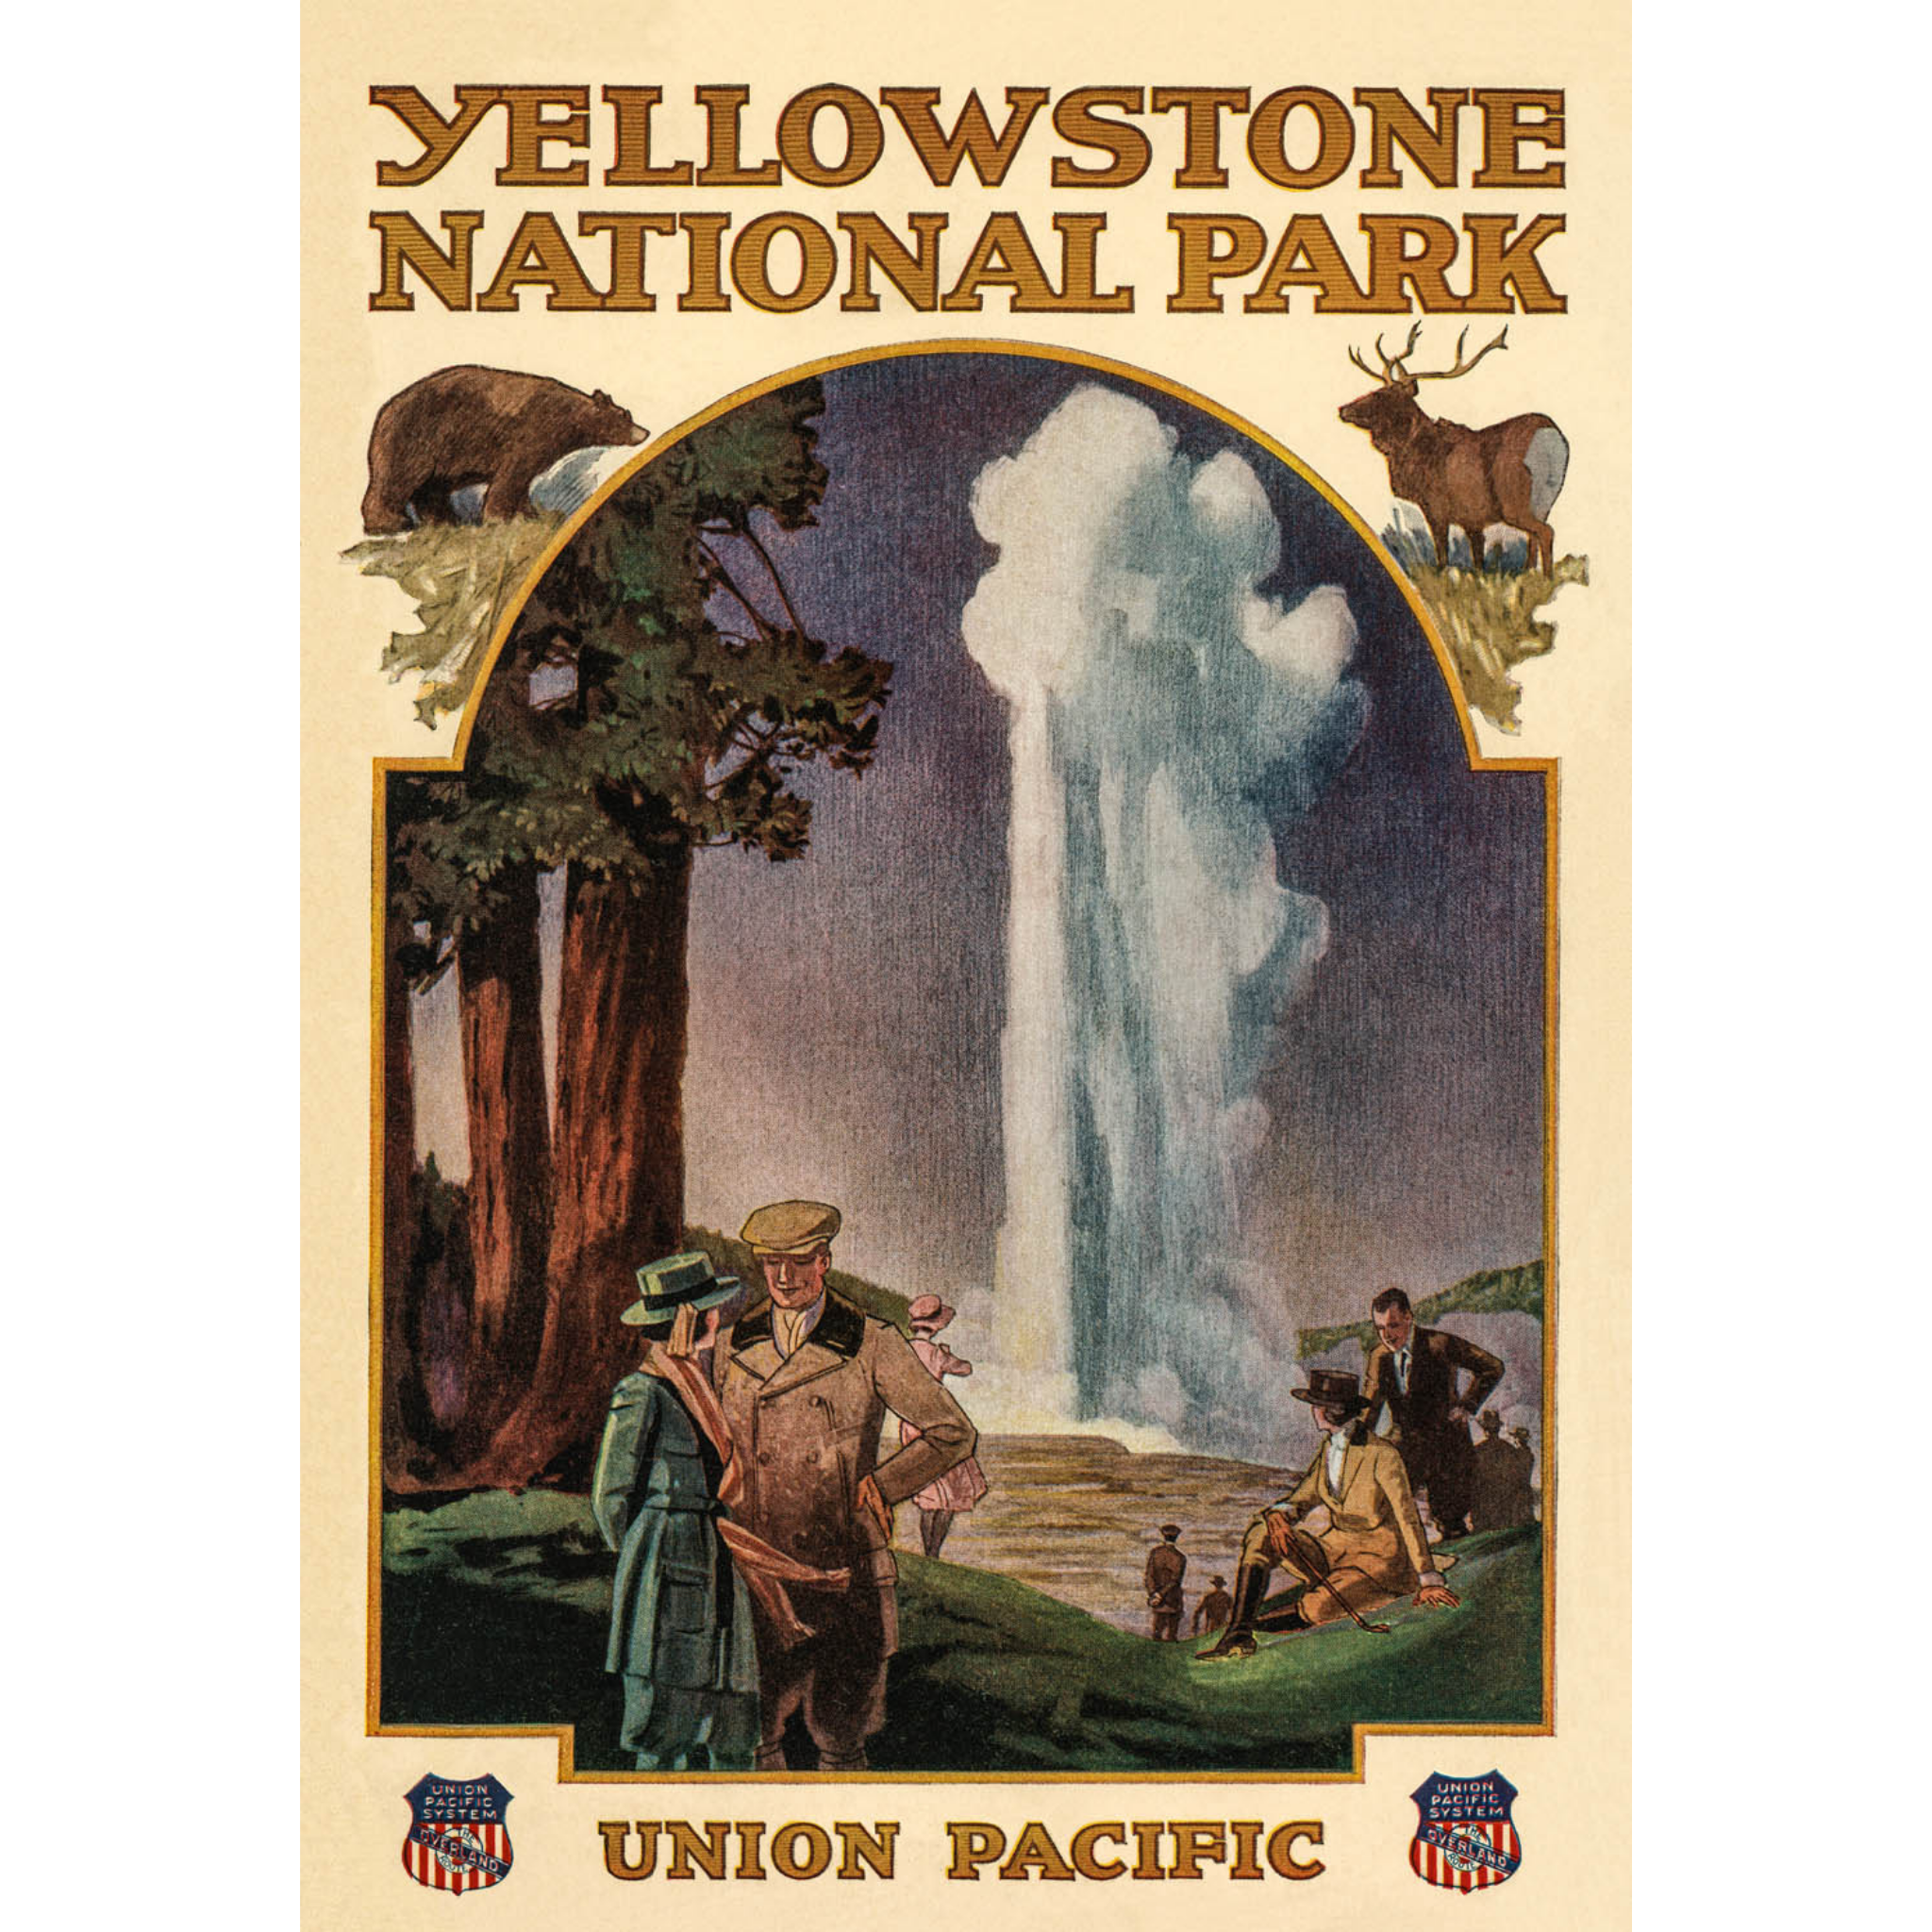 Yellowstone National Park: Old Faithful Geyser (UPRR) - ca. 1923 Lithograph